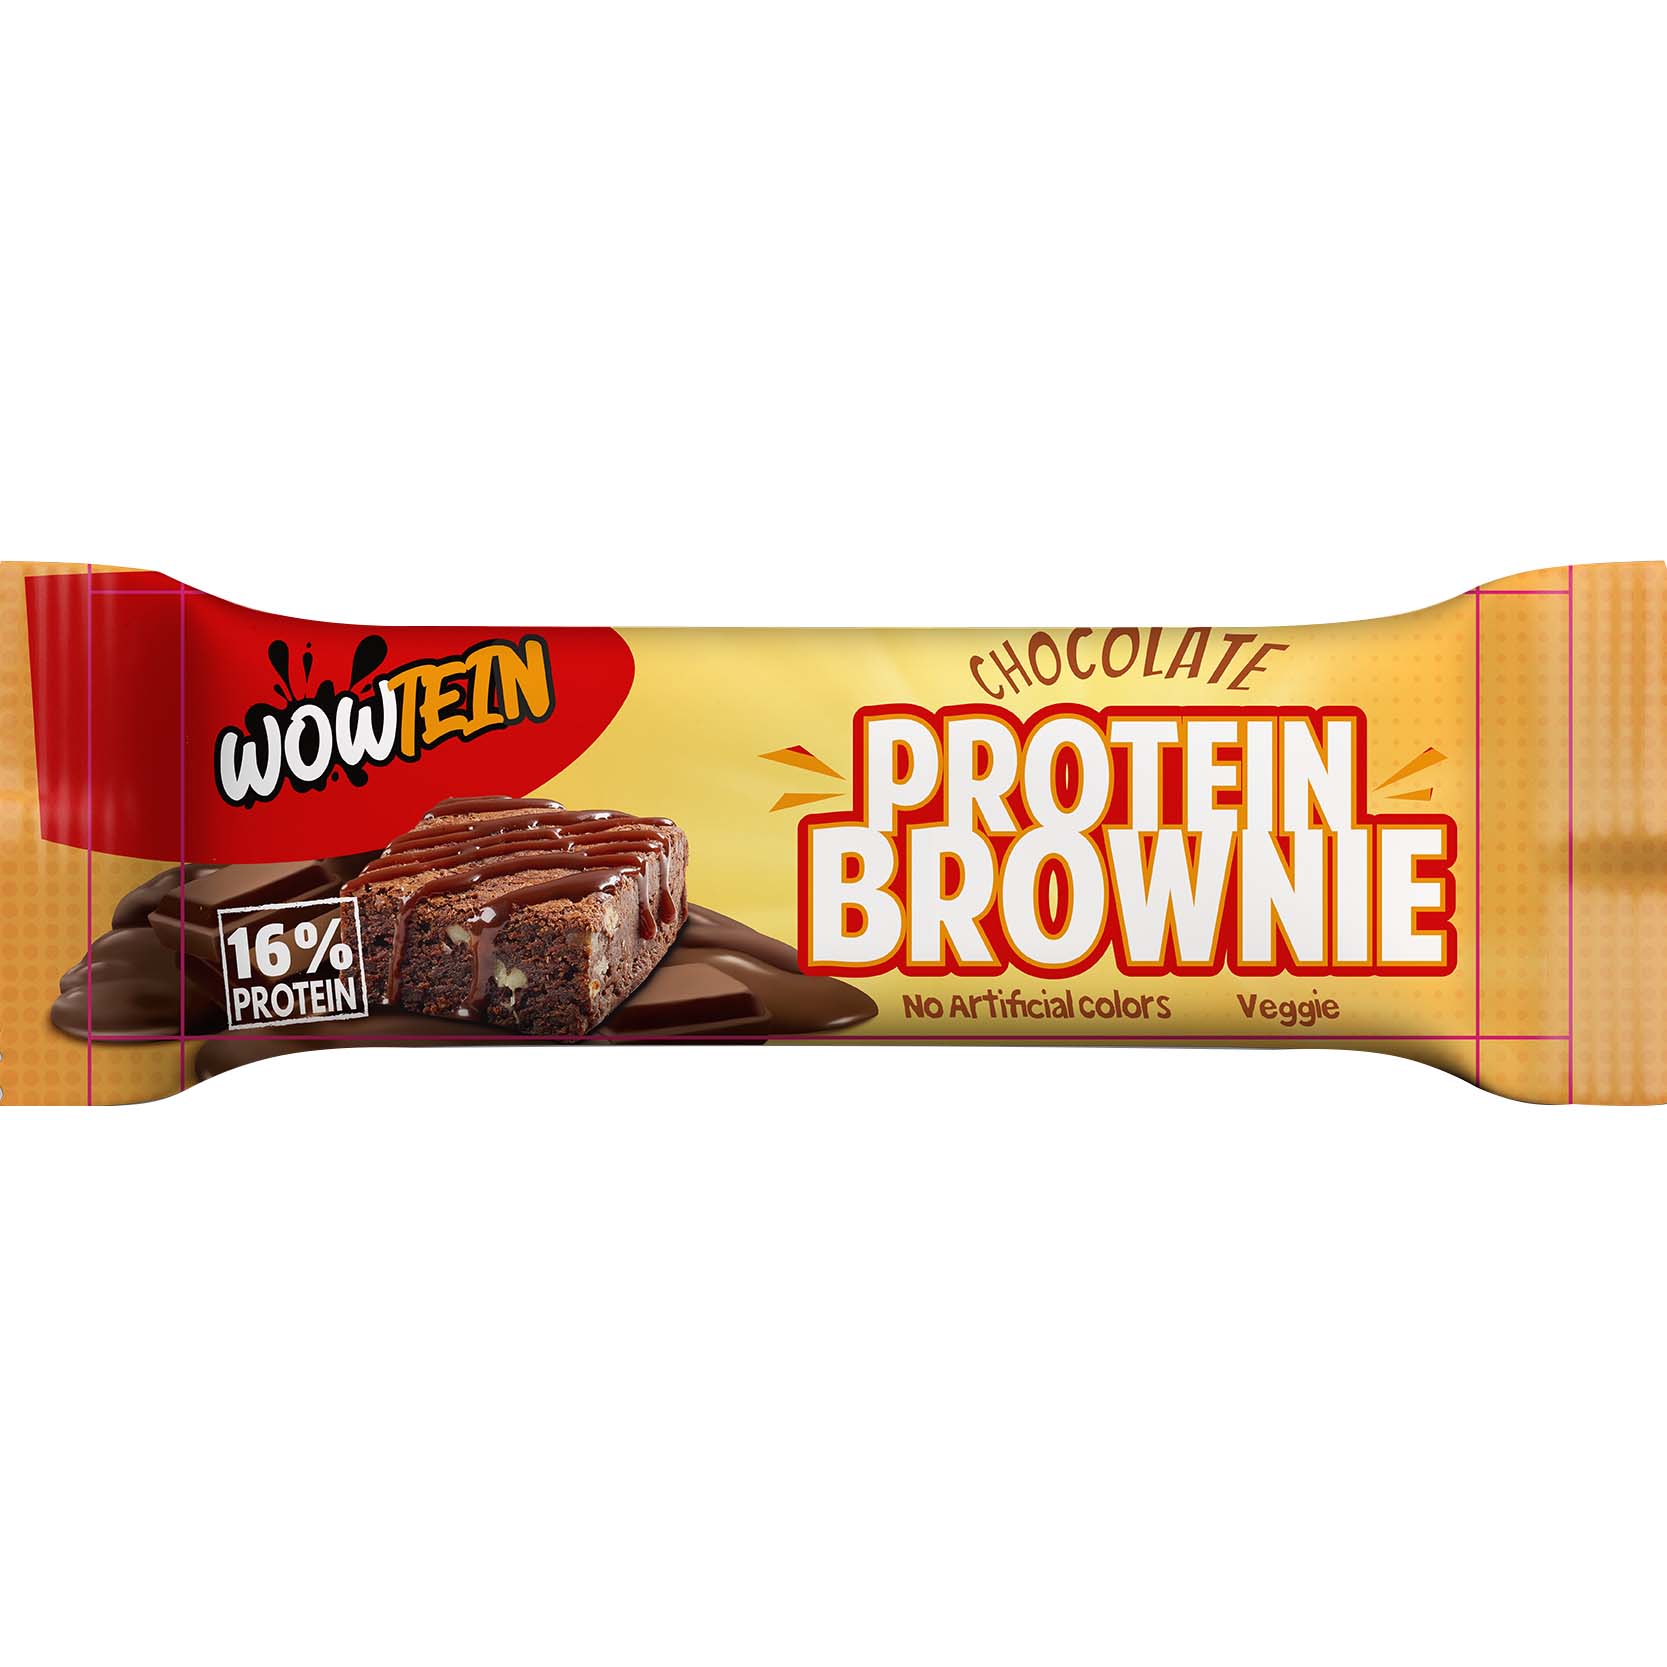 Wowtein Chocolate Brownie Protein 1 Bar Chocolate Brownie